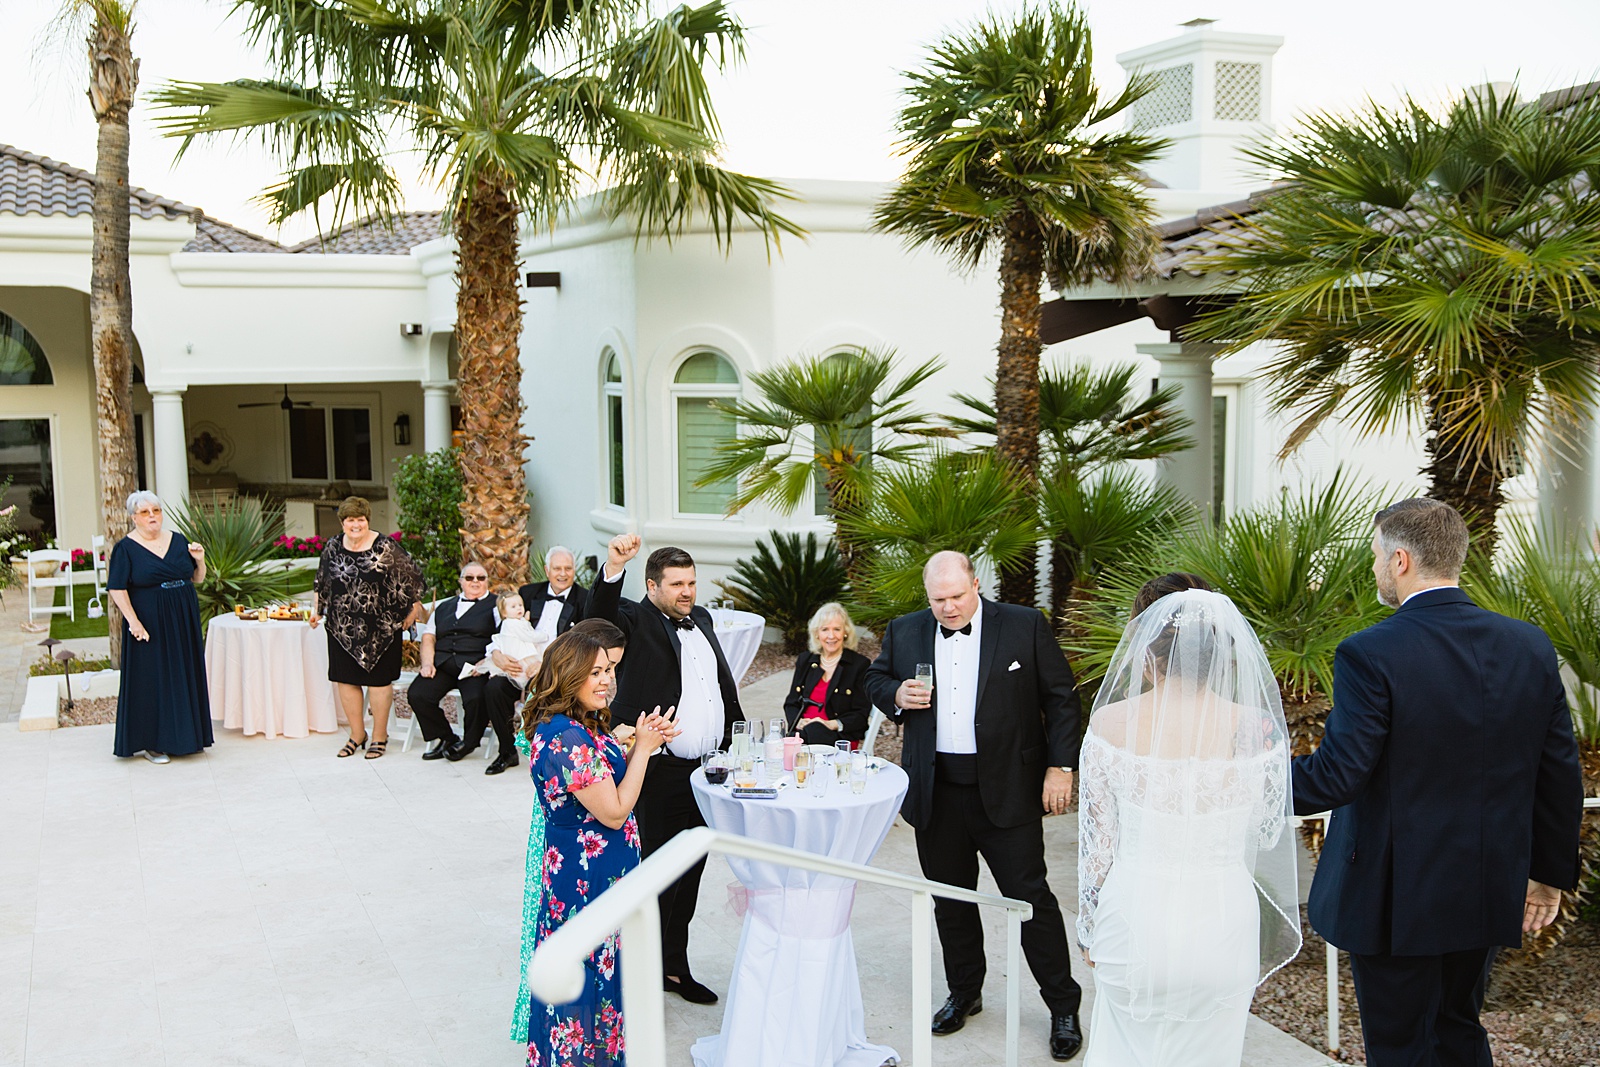 Couple's grand entrance at backyard wedding reception by Scottsdale wedding photographer PMA Photography.